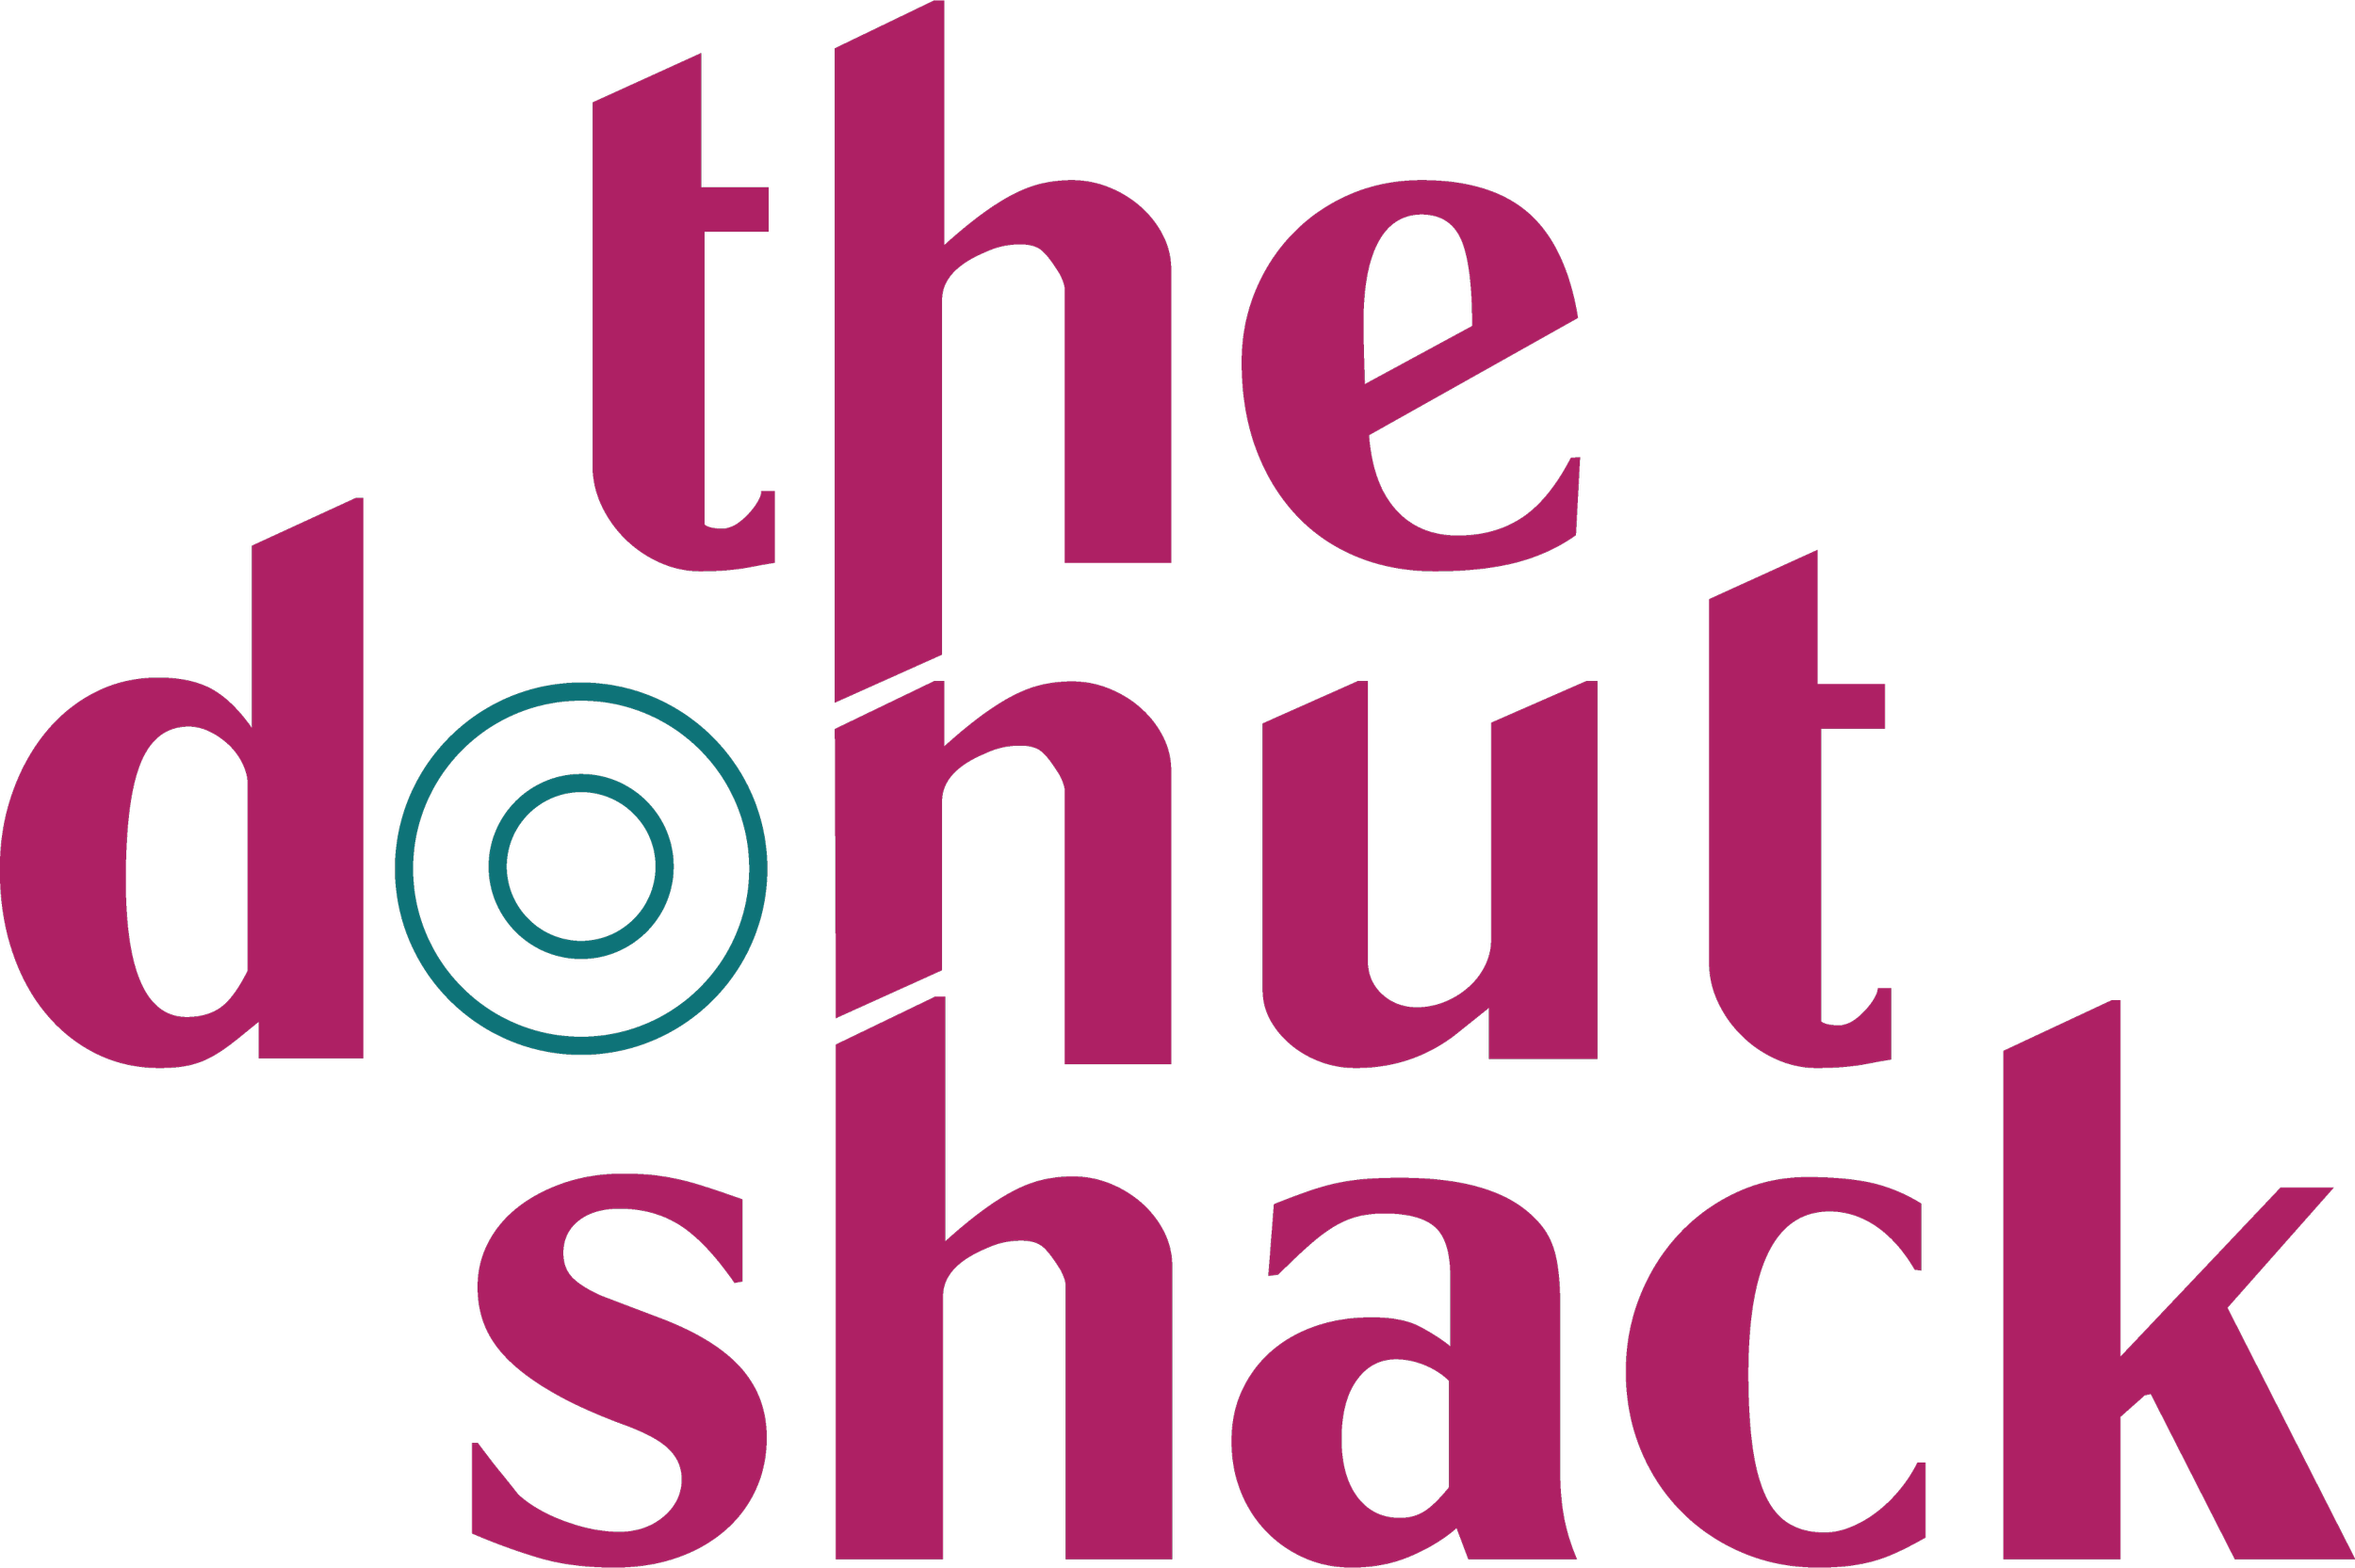 The Donut Shack - Full Color Logo PNG.png